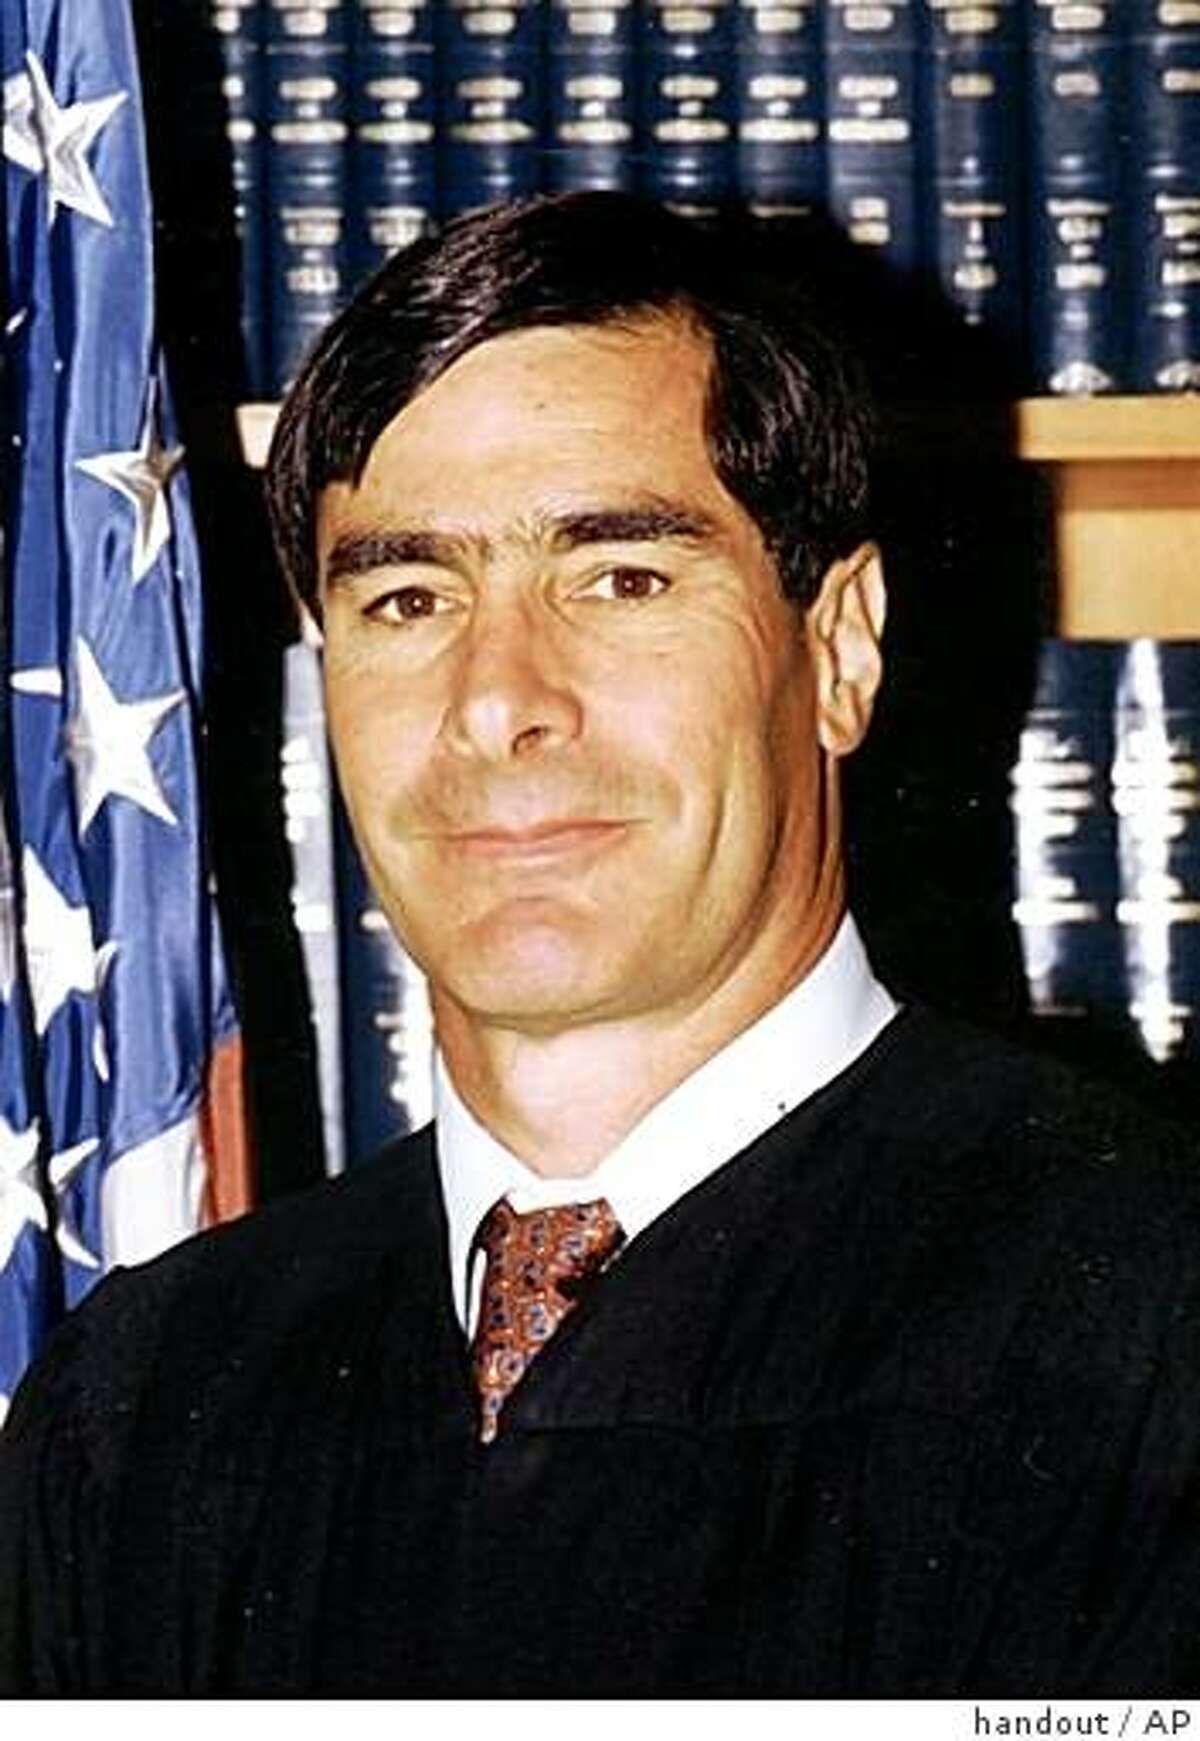 U.S. District Judge Jeremy Fogel is shown in an undated handout photo